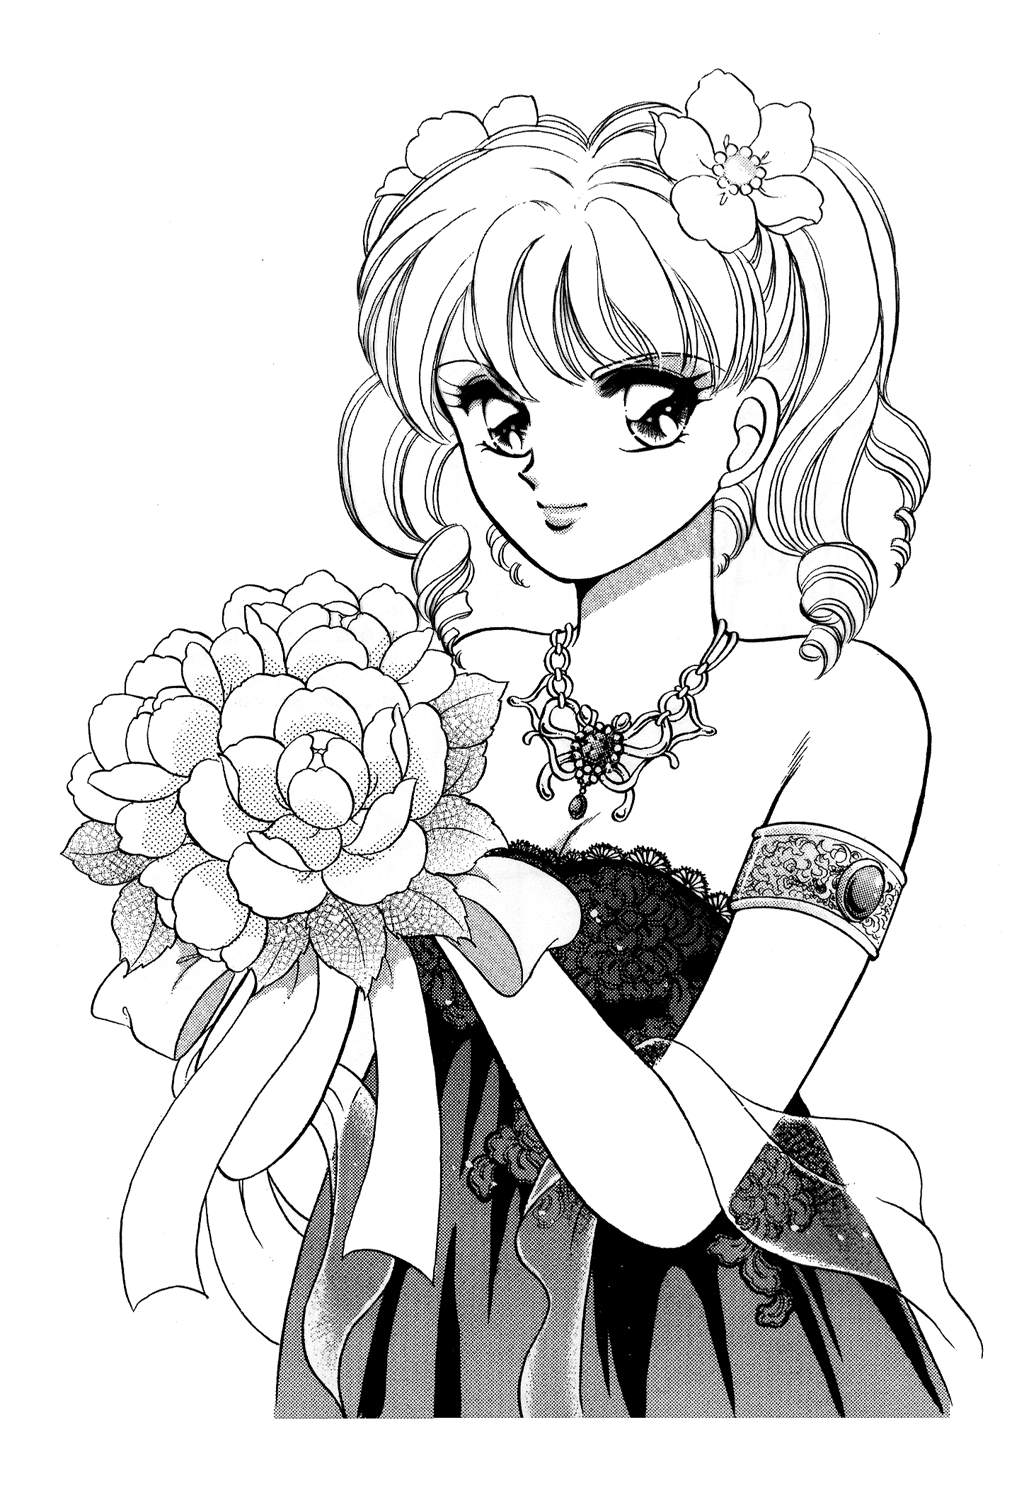 Le dessin du Manga 04 - Personnages feminin, Attitudes, Expressions numero d'image 113